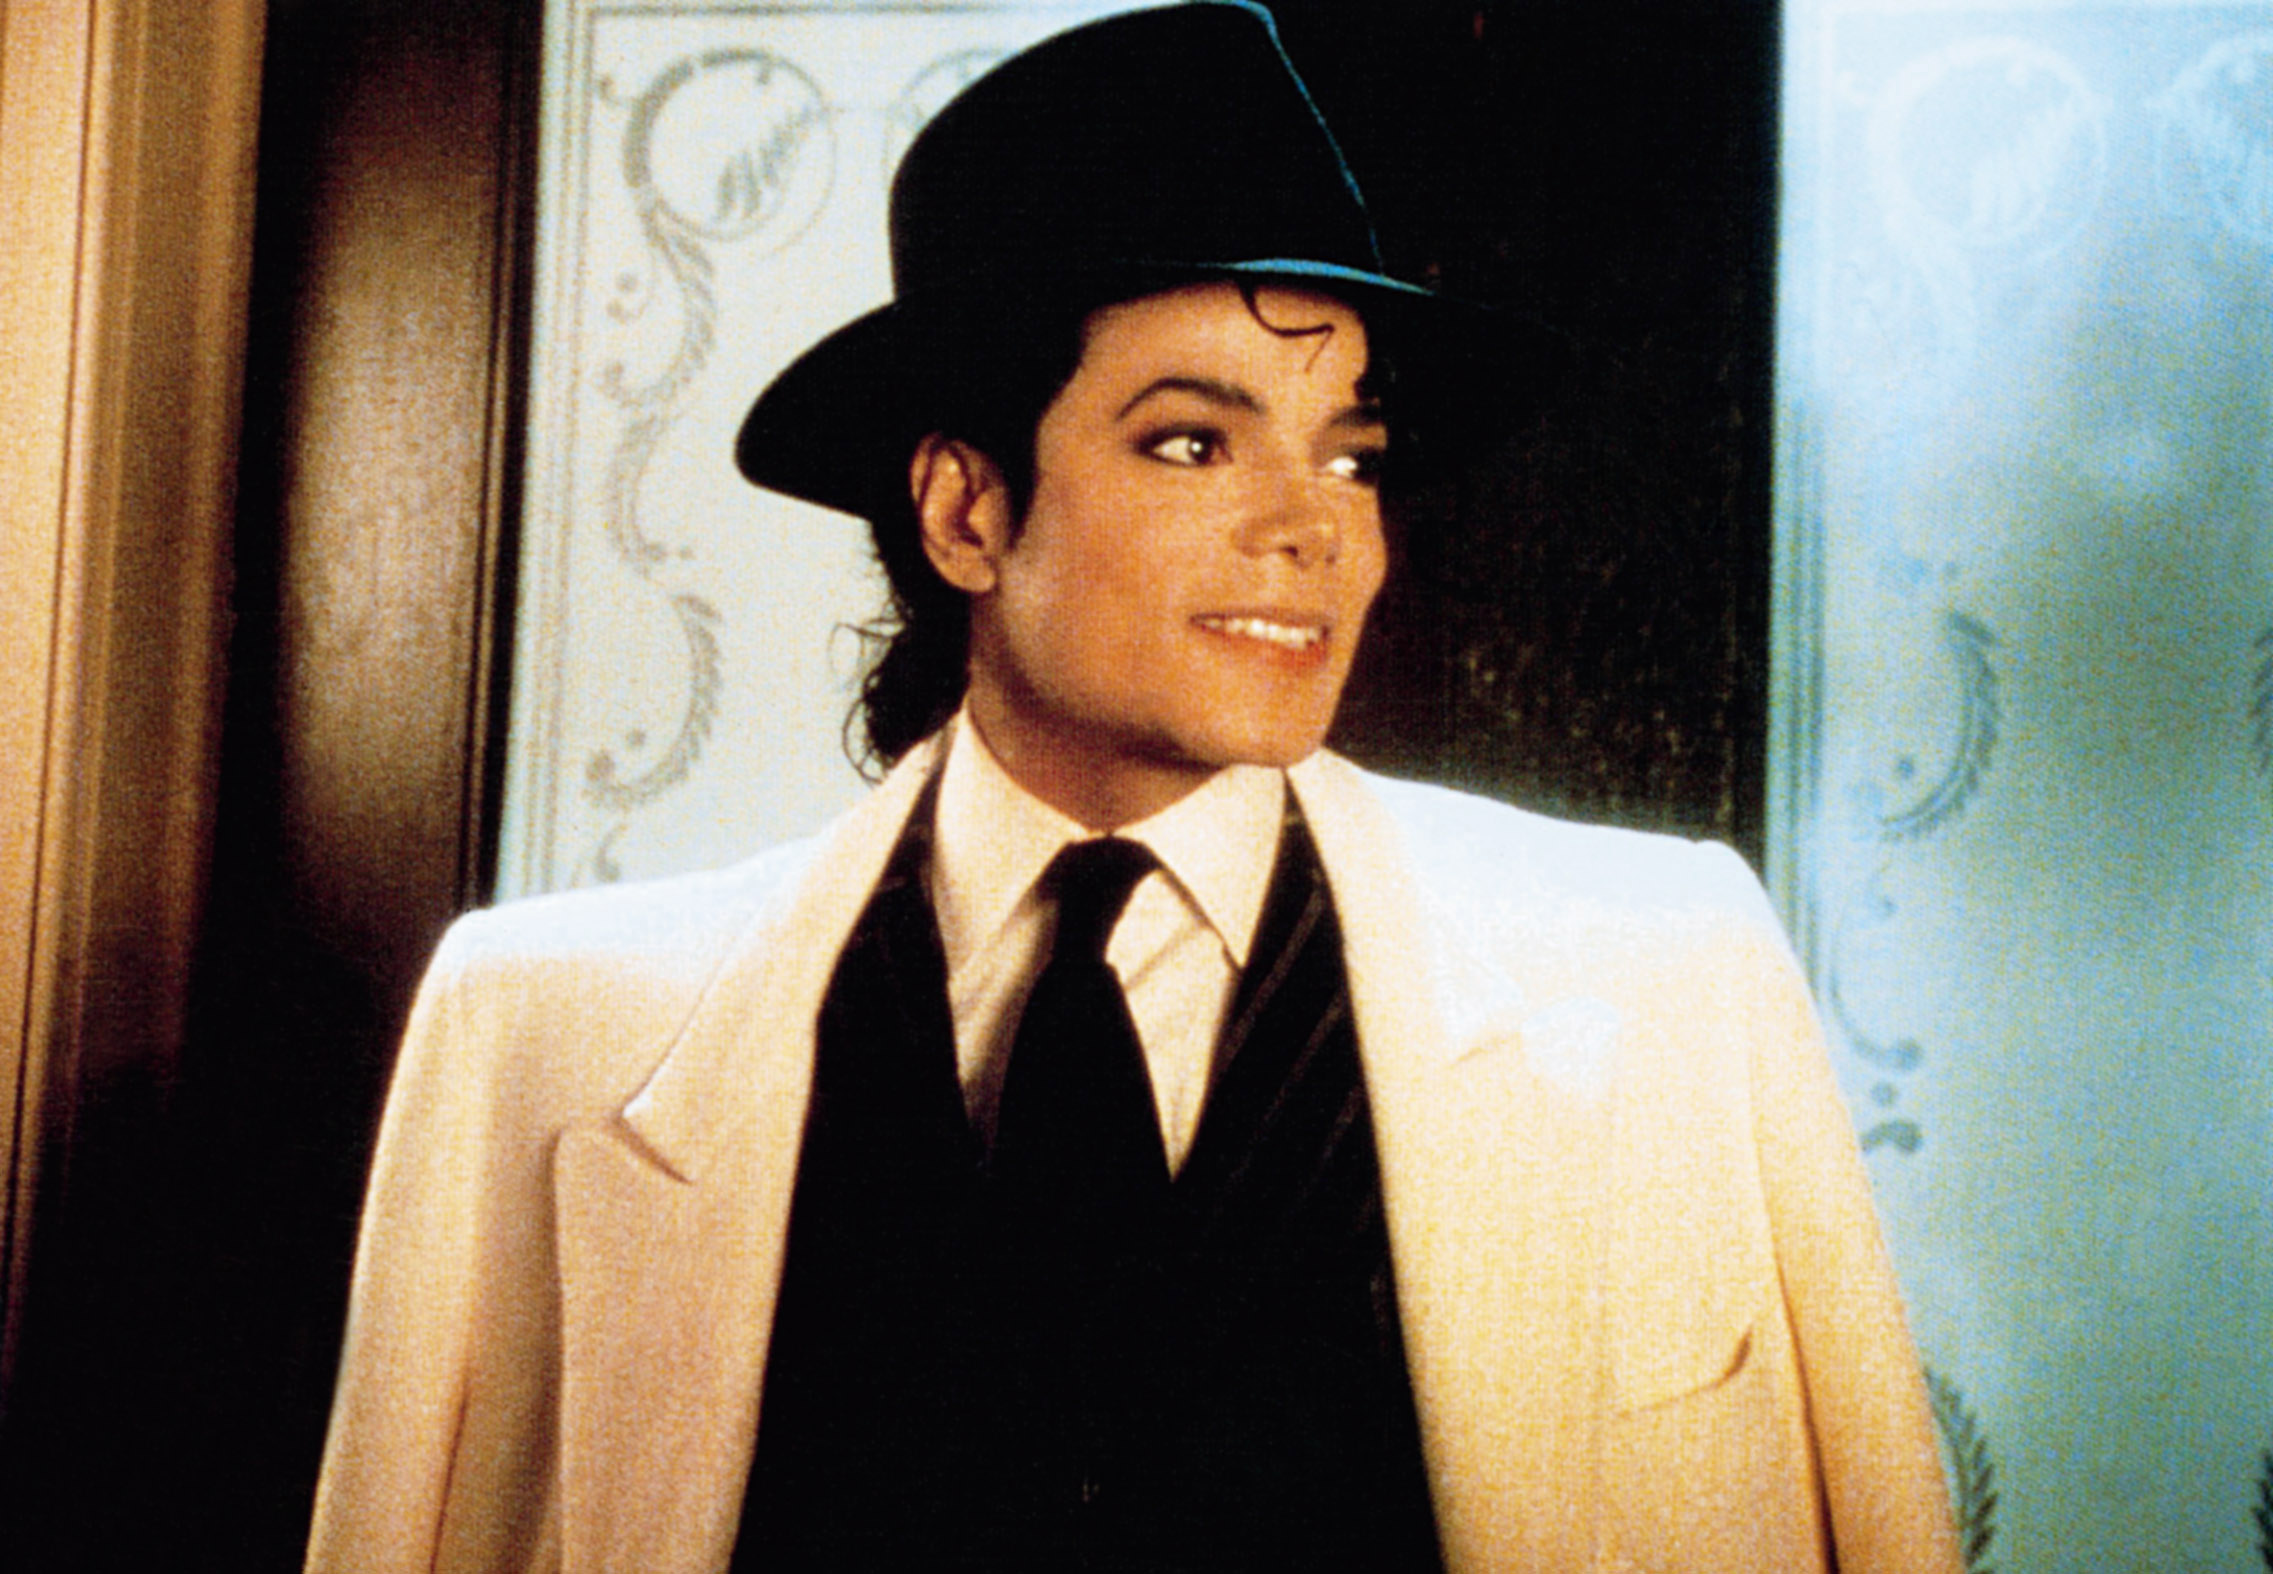 Lawsuit By Michael Jackson Accuser Dismissed By Judge